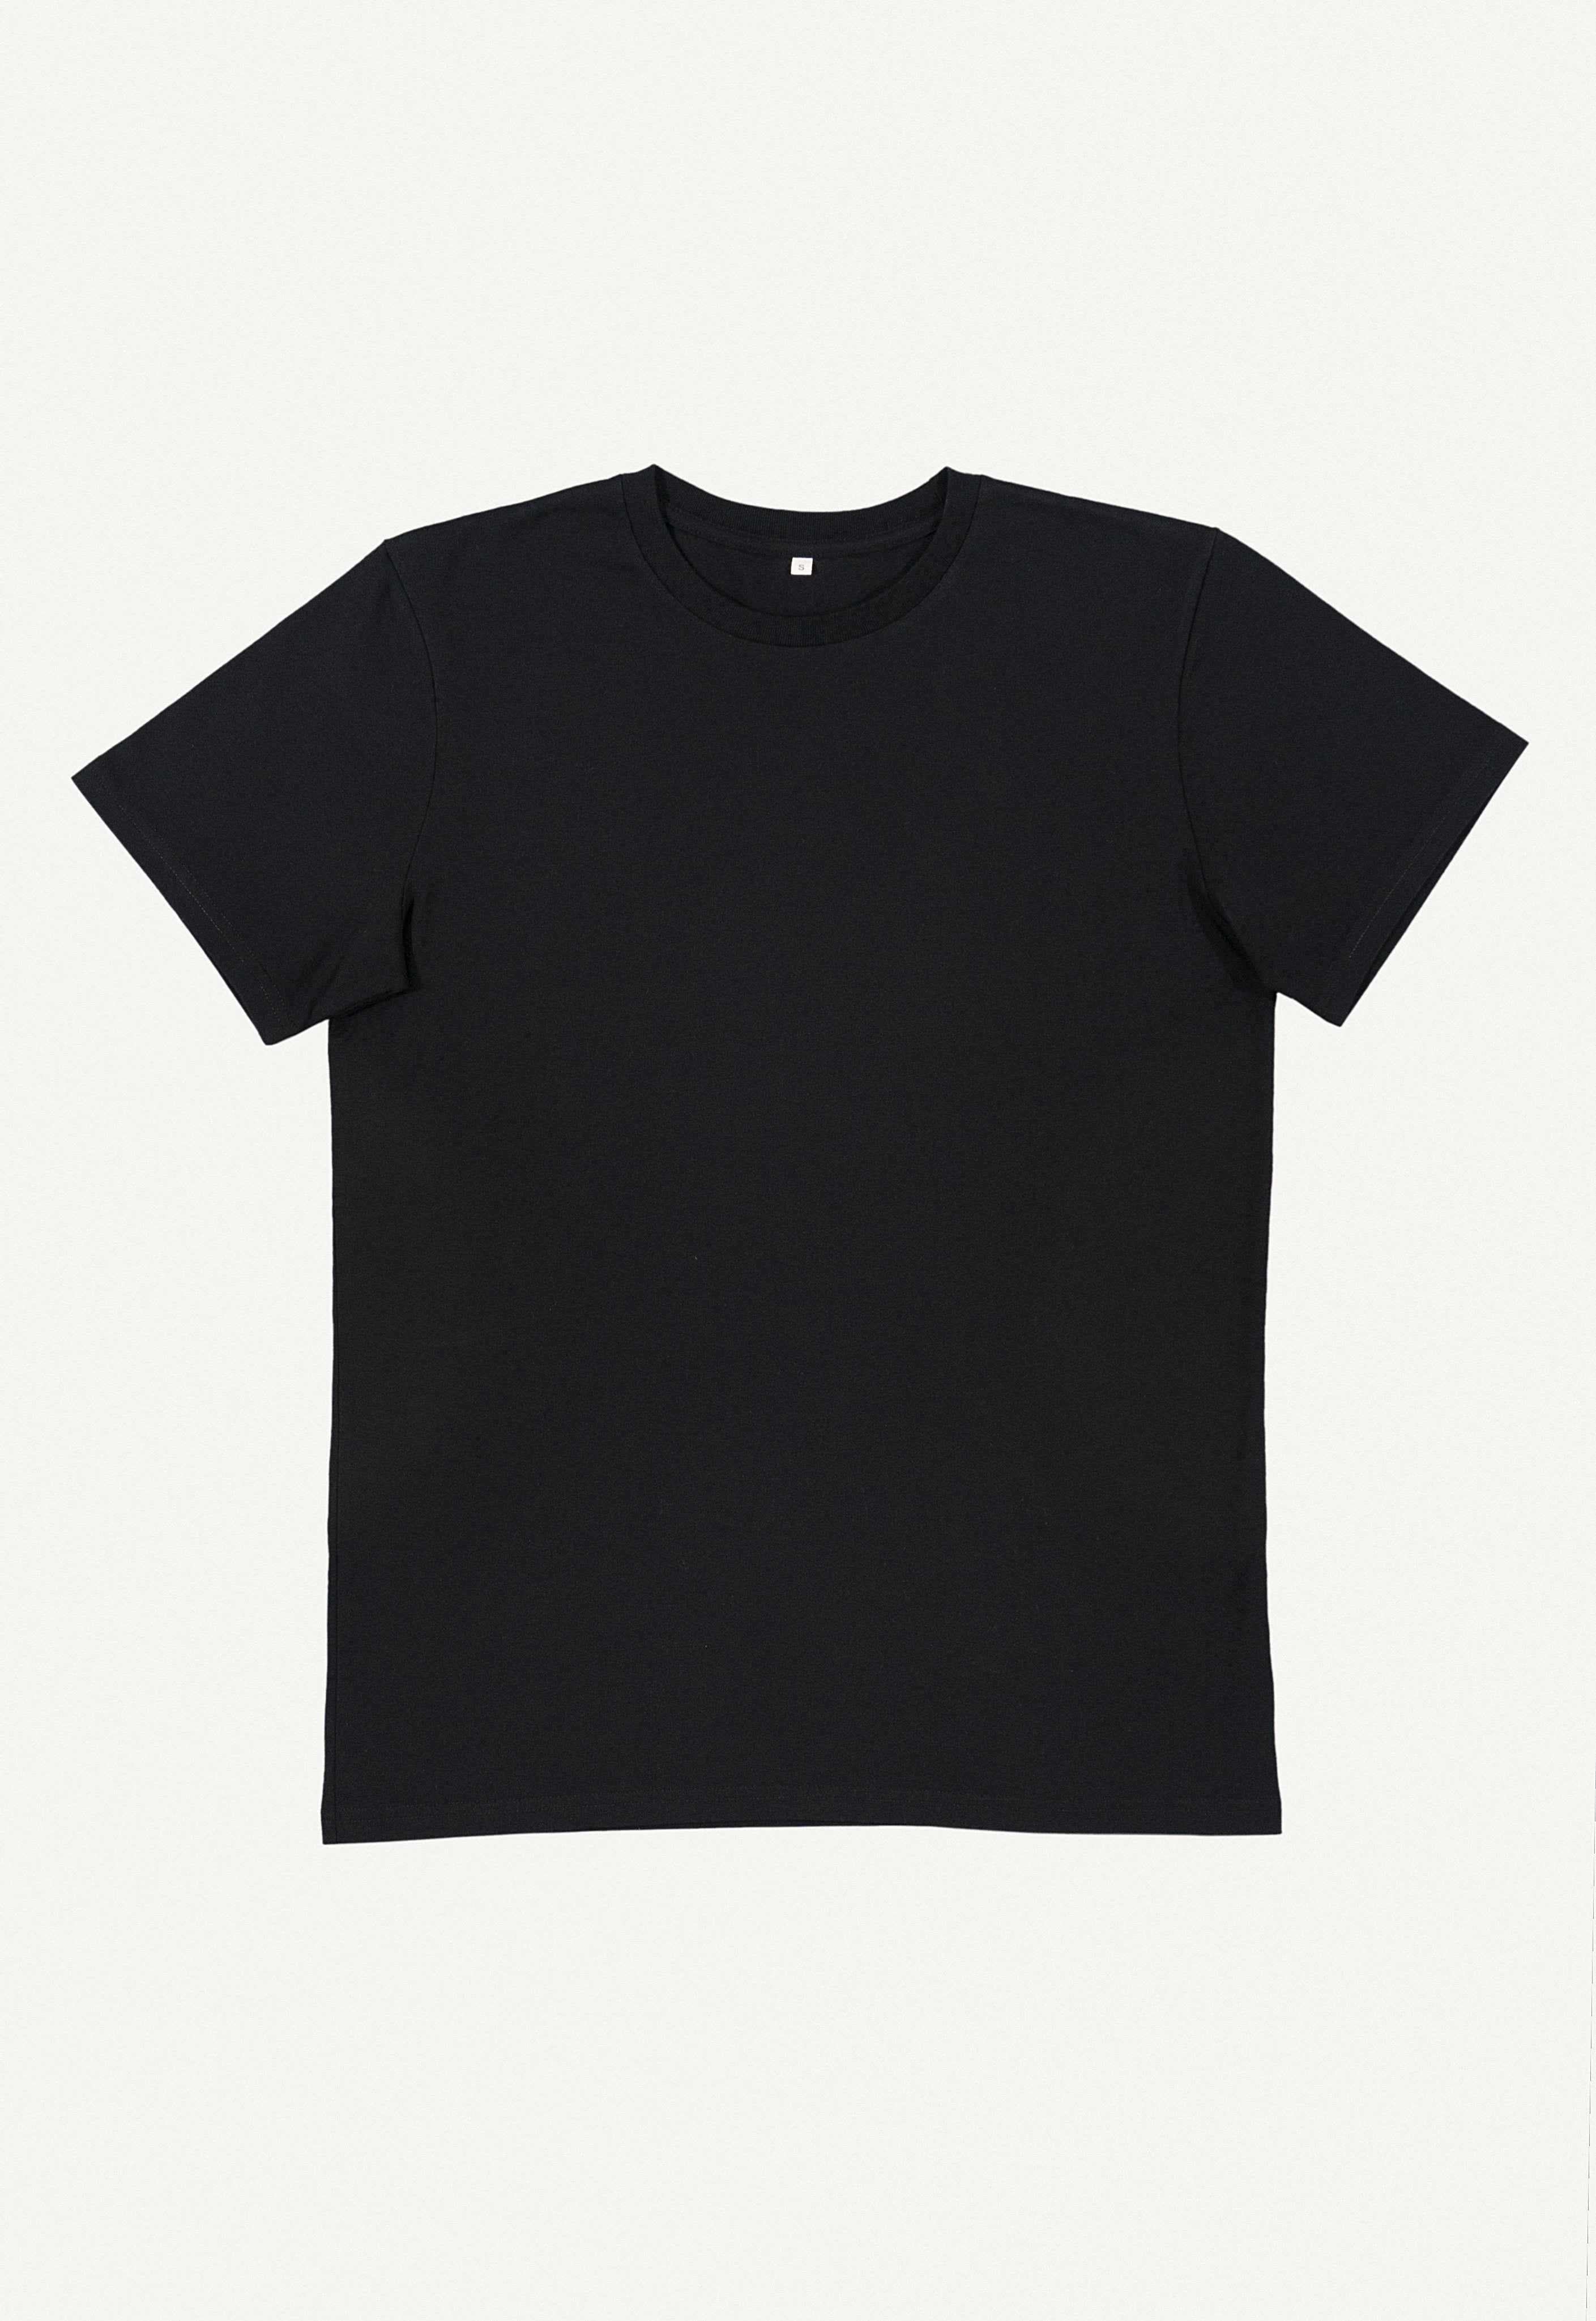 Oy_AC_T-Shirt_Black-Blanko_Front.jpg